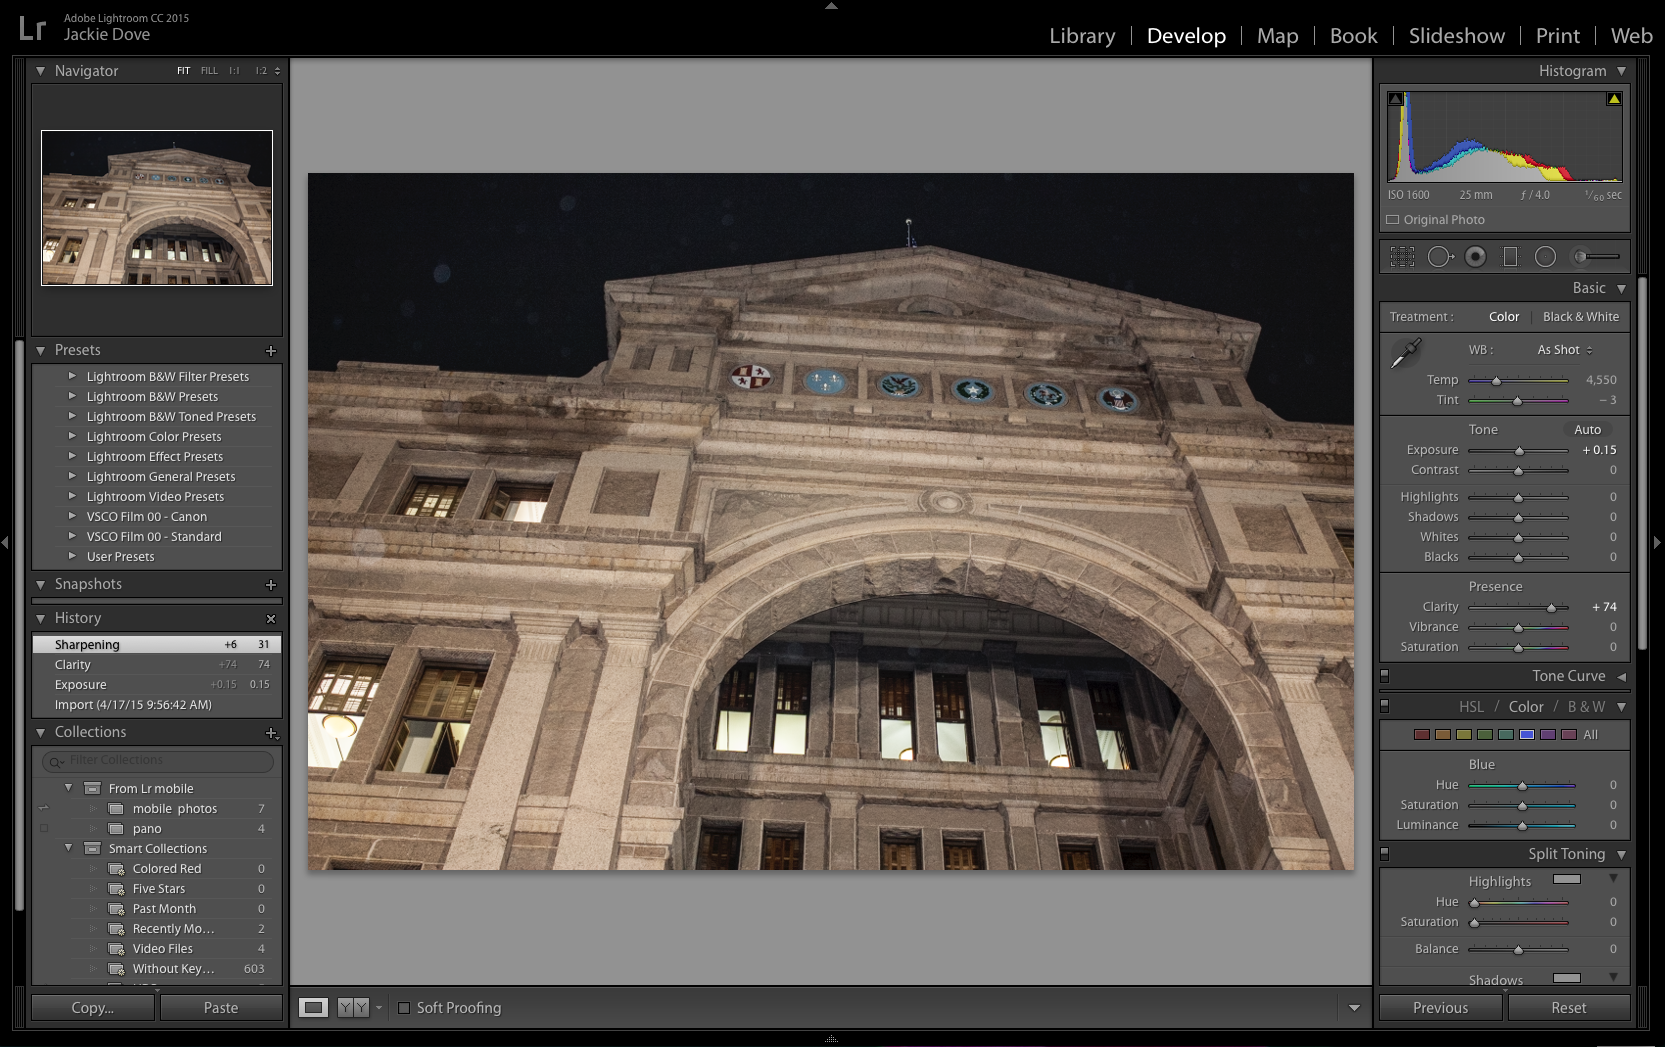 Adobe Photoshop Lite For Mac